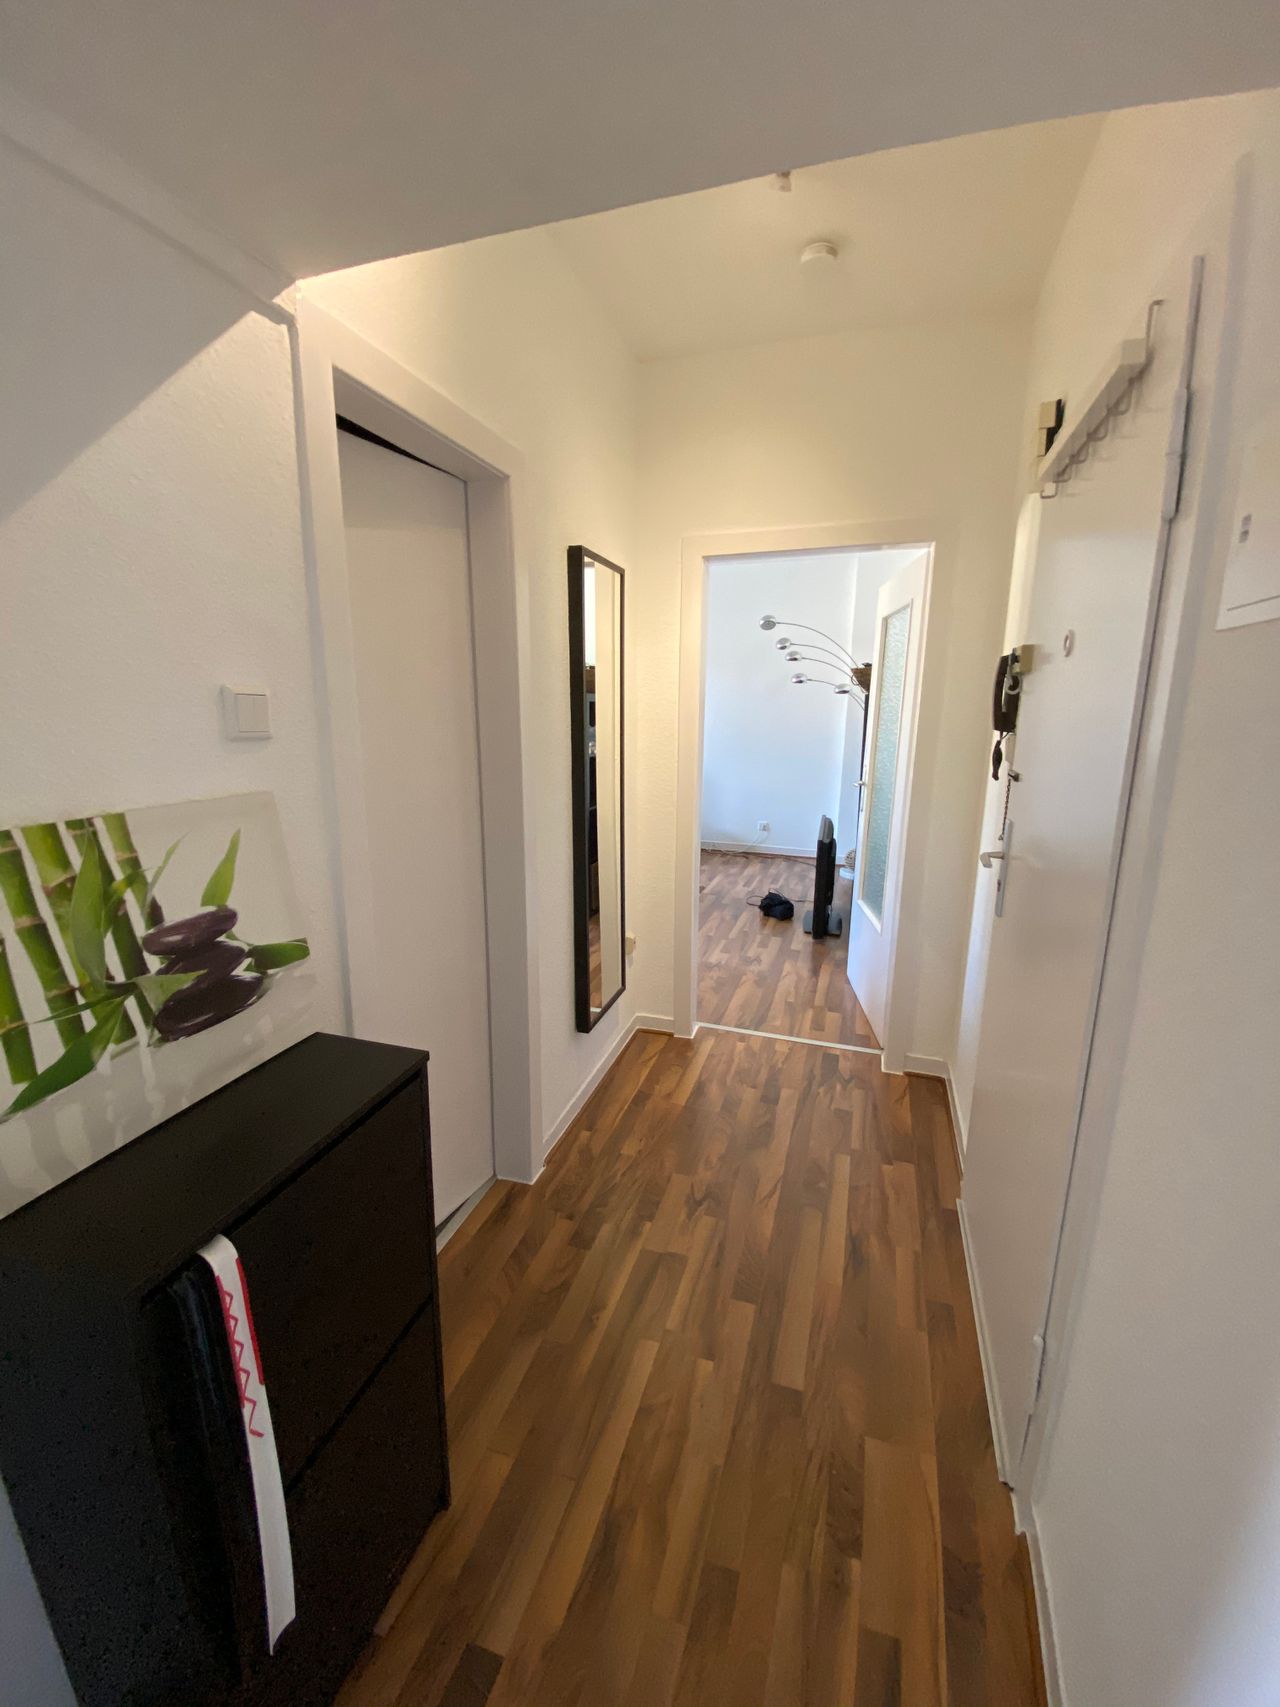 Furnished apartment in best location in Düsseldorf-Pempelfort